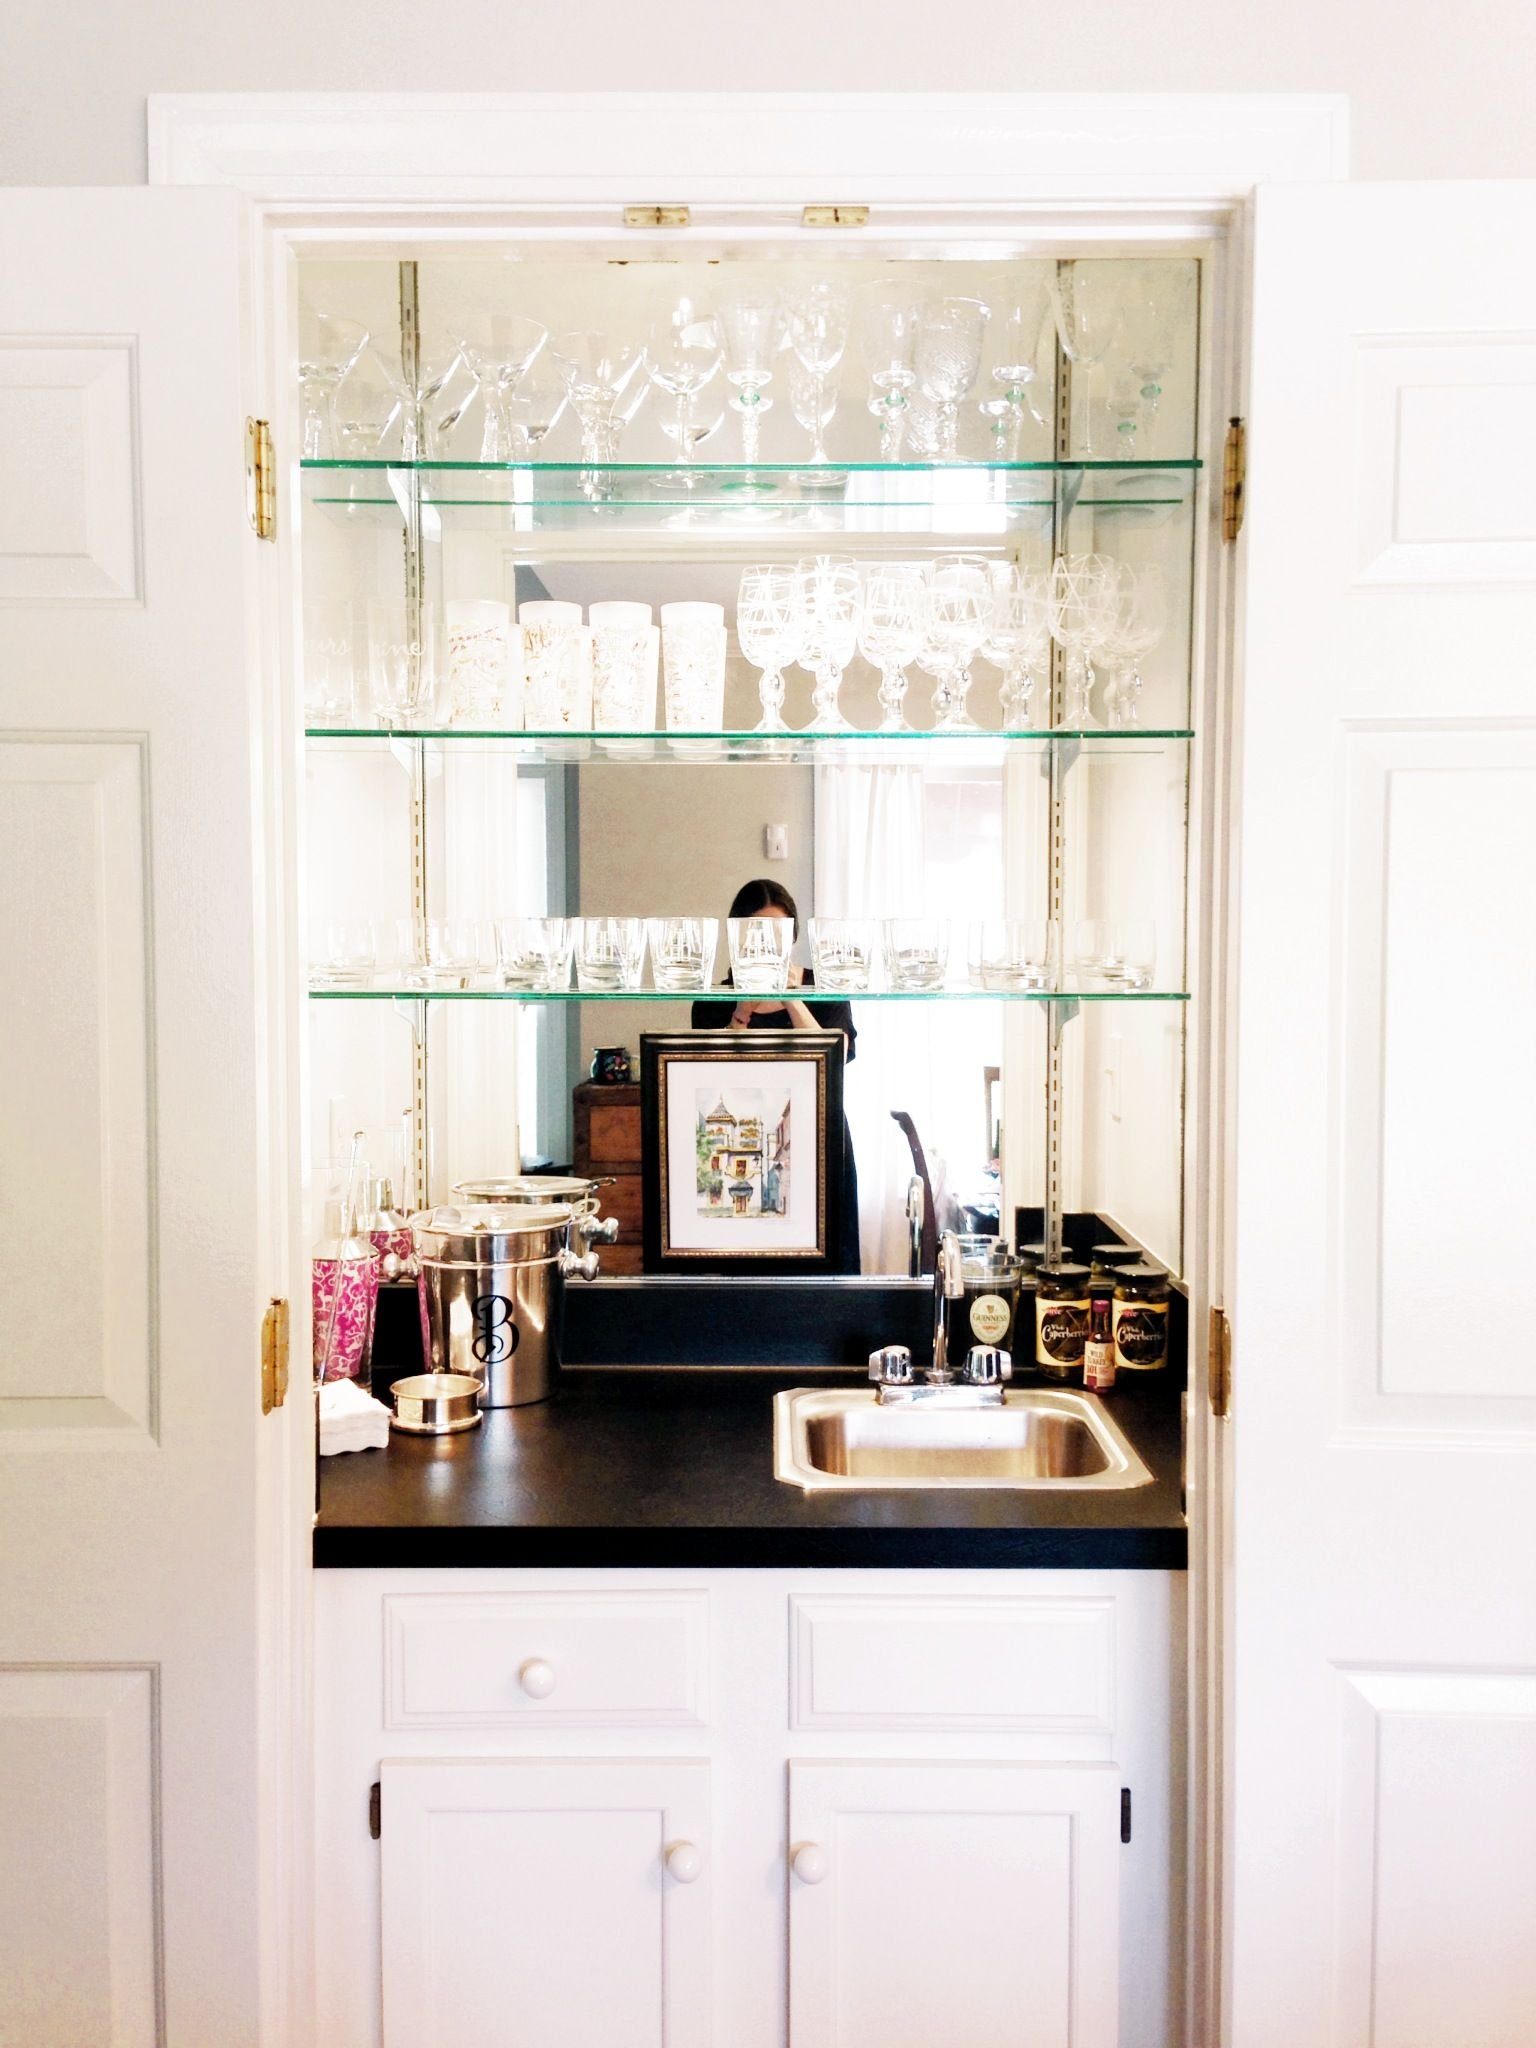 Baby glass shelf box dish. Шкаф барная для маленькой кухни. Барная полка зеркальная. Зеркальные барные полки. Шкаф-бар для кухни.